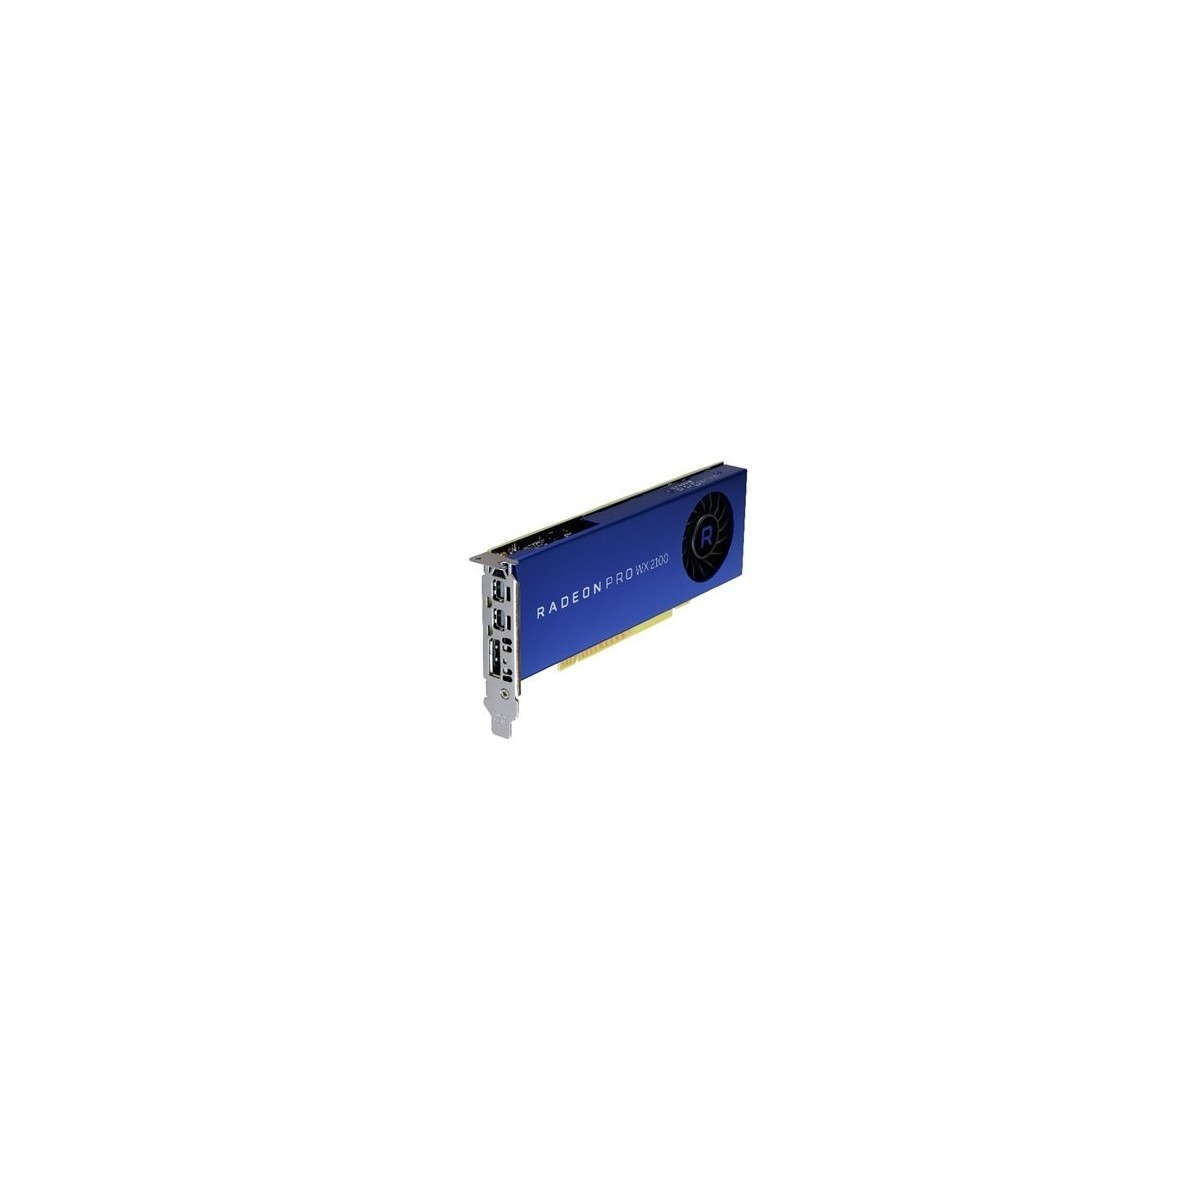 Supermicro AOC-S3916L-H16IR-32DD 16-Port 12Gb/s SAS/SATA RAID max. 32 drives Broadc. 3916 - Serial Attached SCSI (SAS) - Serial 